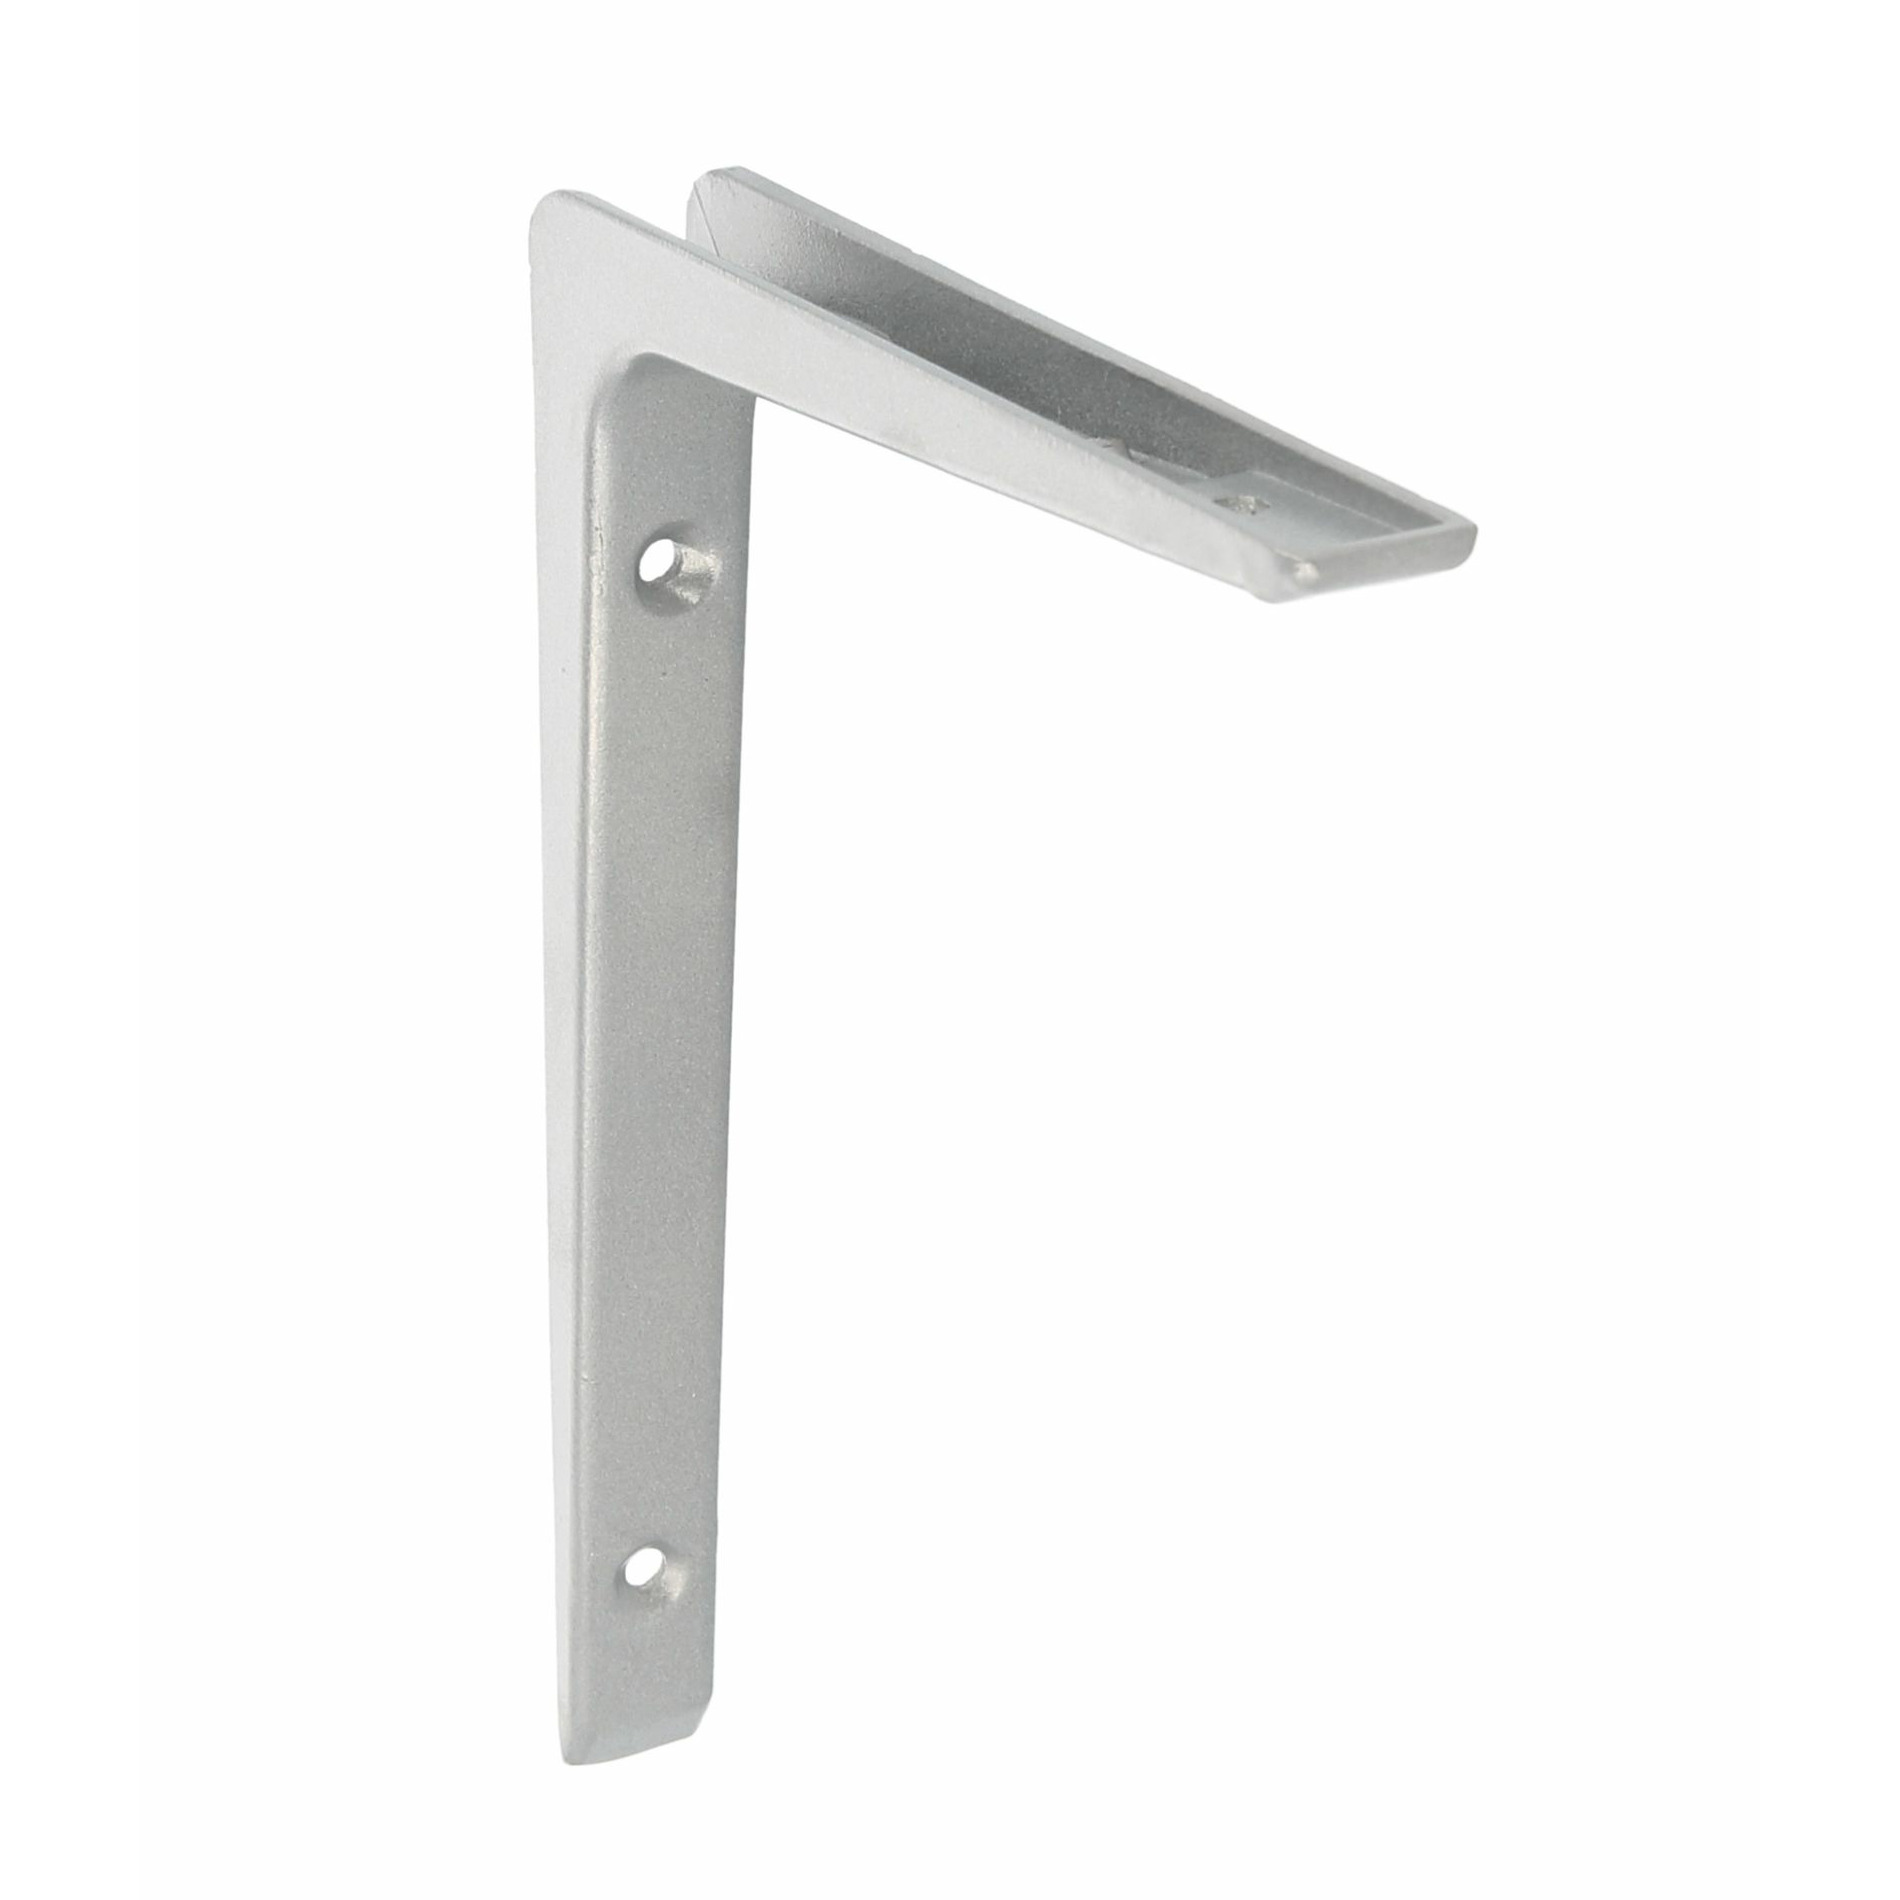 AMIG Plankdrager/planksteun van aluminium - gelakt zilvergrijs - H150 x B100 mm -